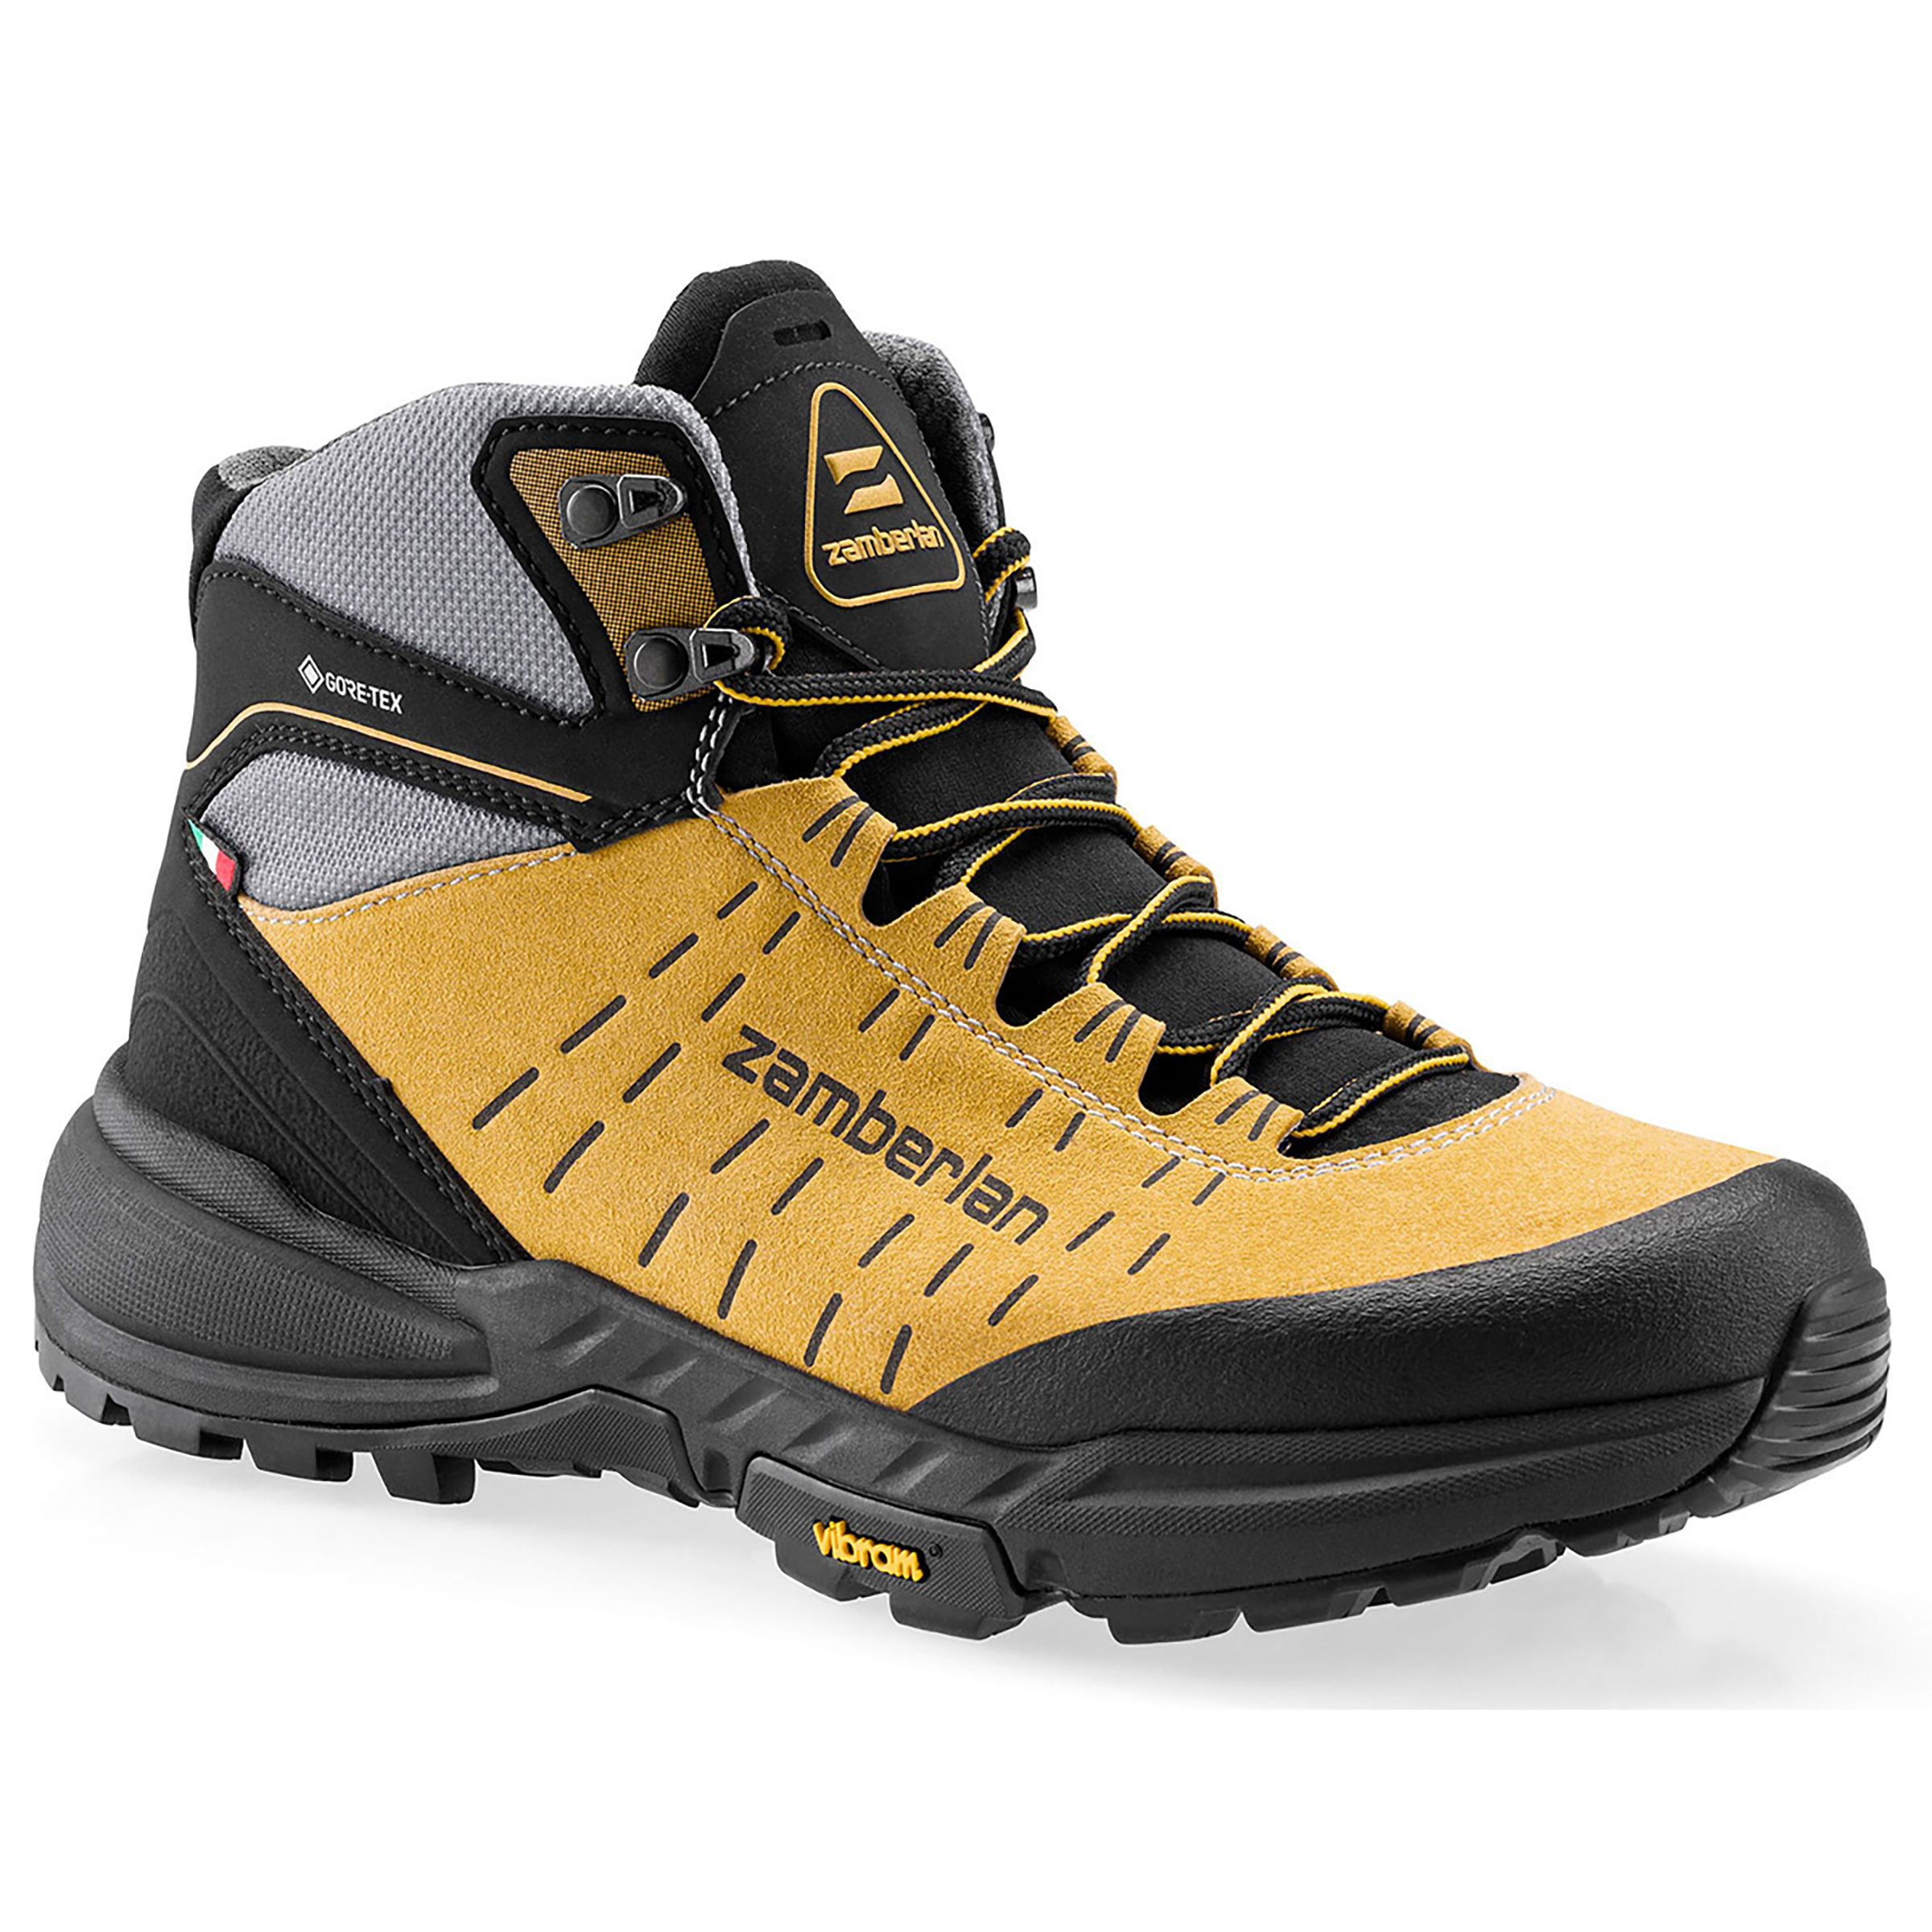 Zamberlan 334 Circe GTX Waterproof Hiking Boots for Ladies - Yellow - 8.5M